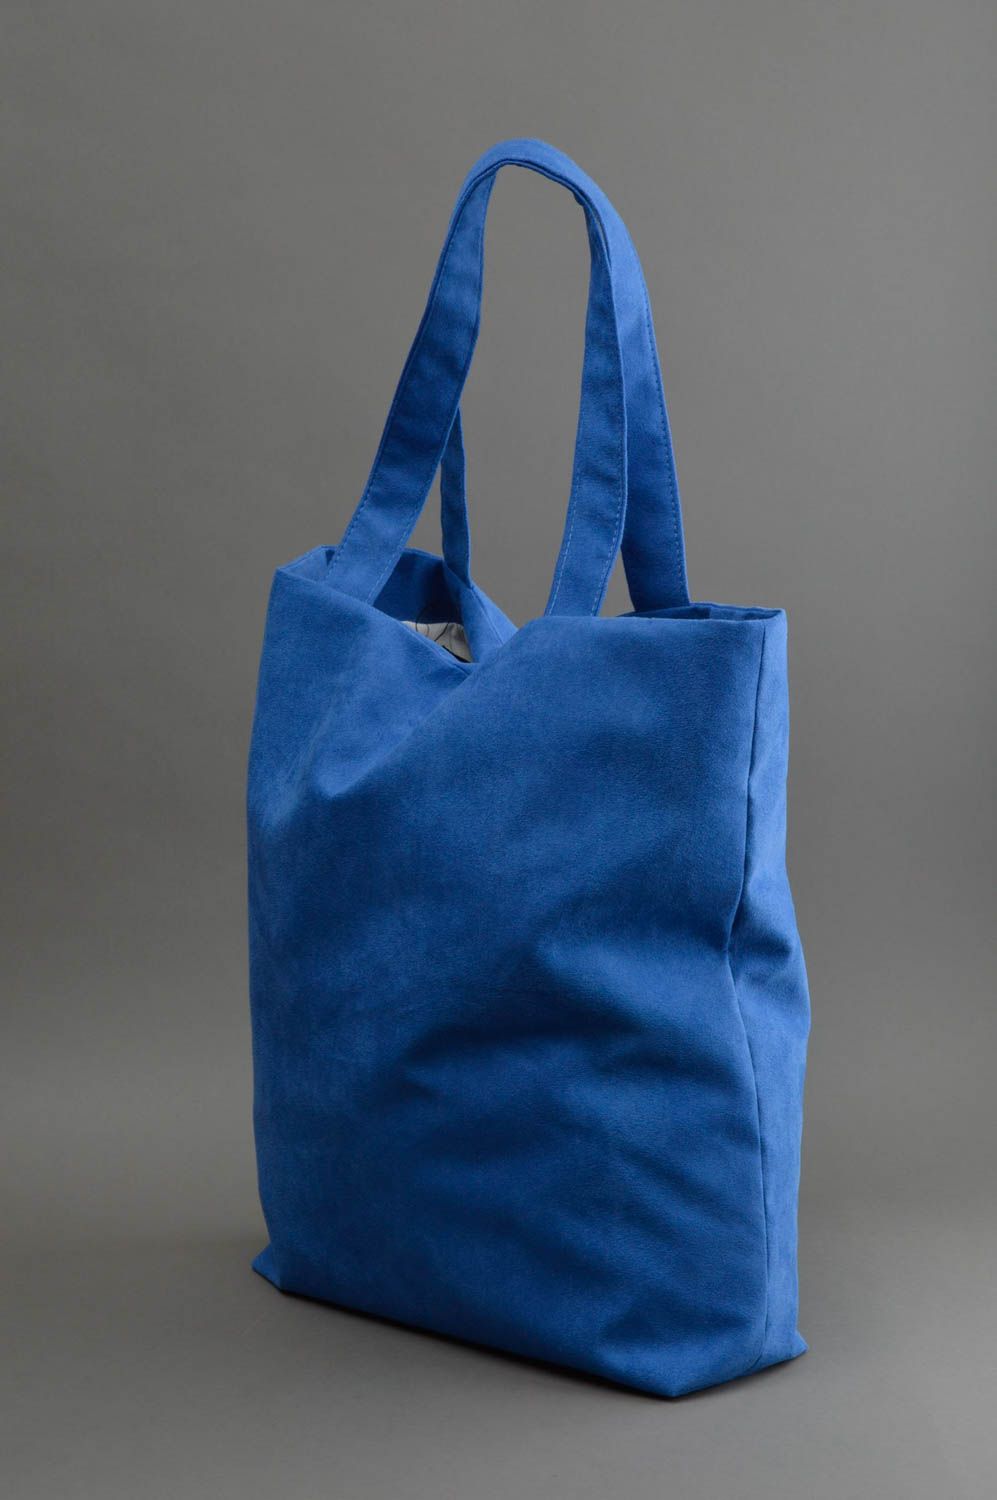 Handmade cloth purse bright blue fabric handbag bags for women gift for her photo 2